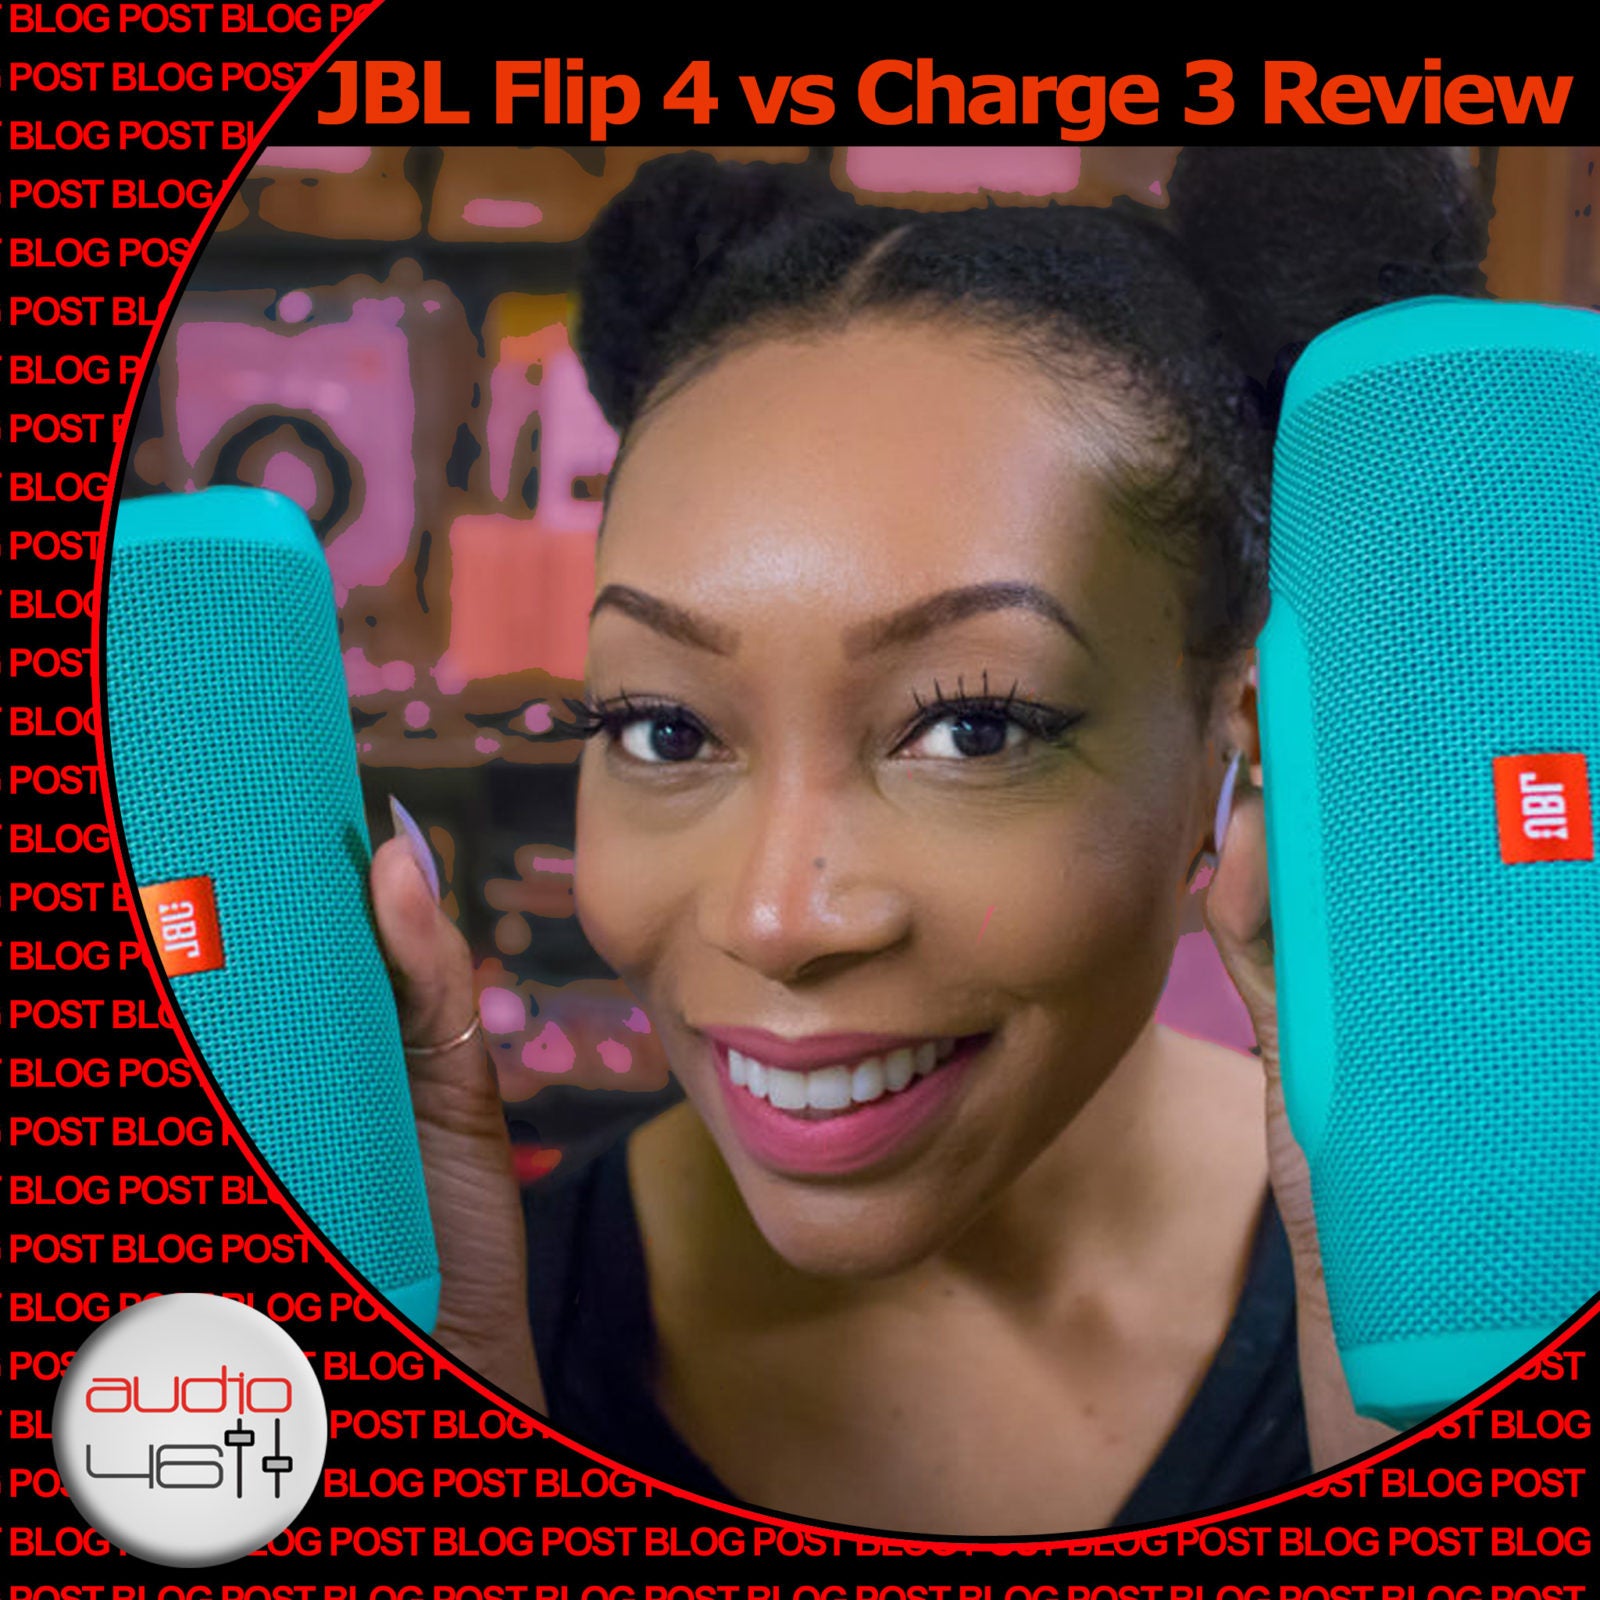 Revisión de JBL Flip 4 vs Charge 3